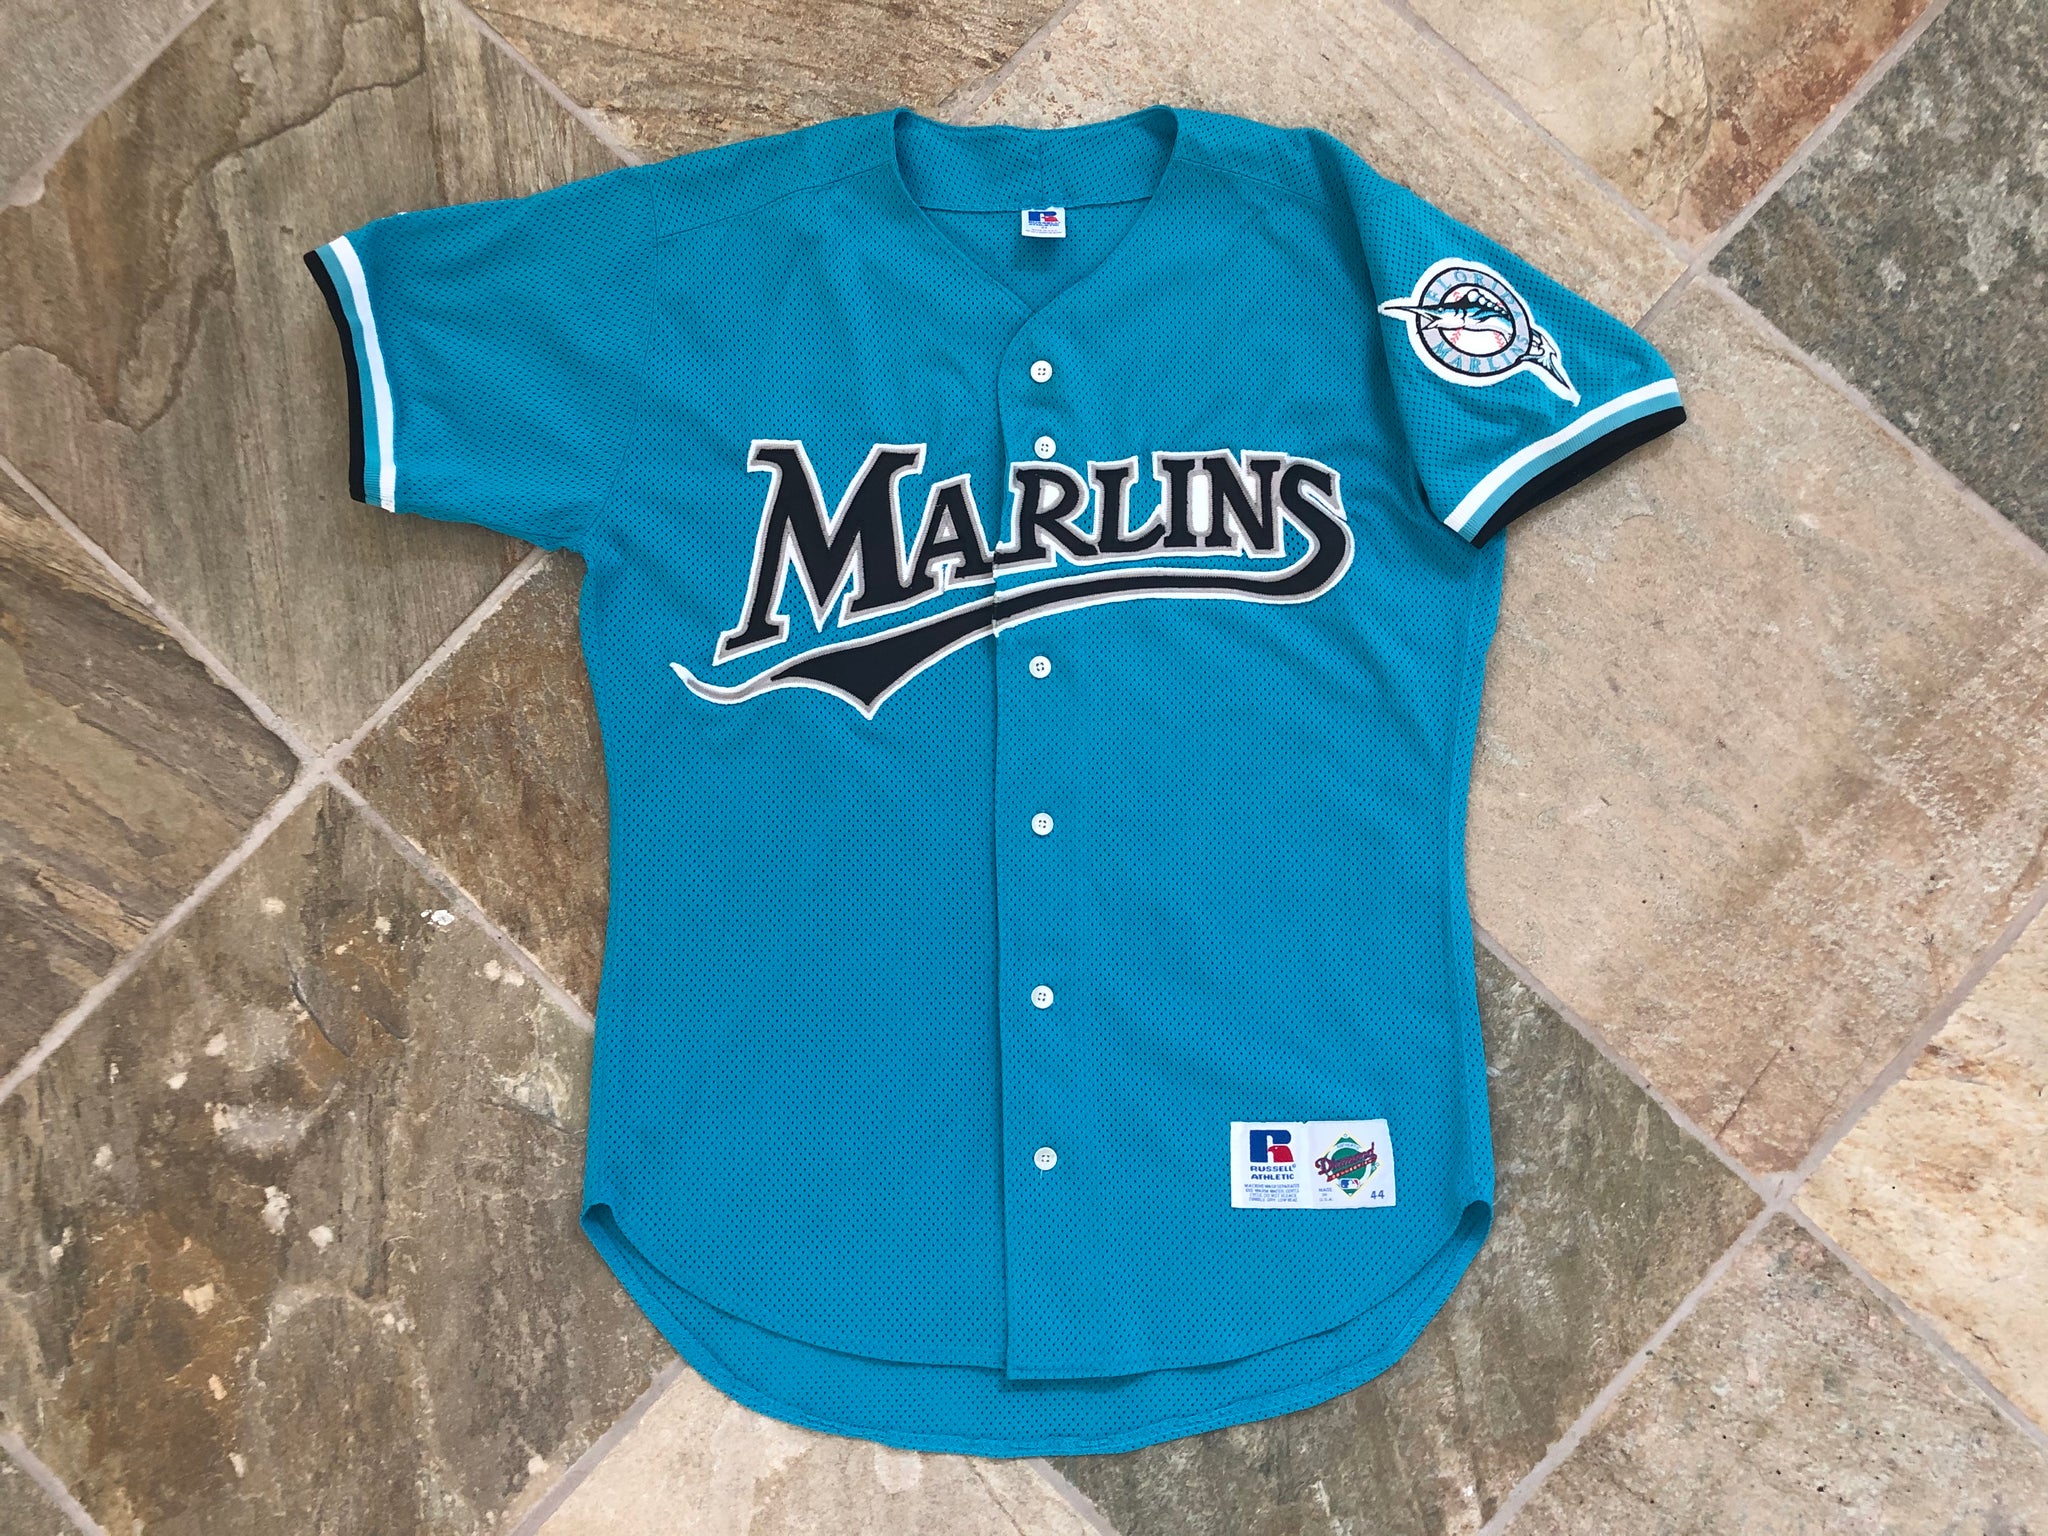 Vintage Florida Marlins Starter Pinstripe Baseball Jersey, Size Large